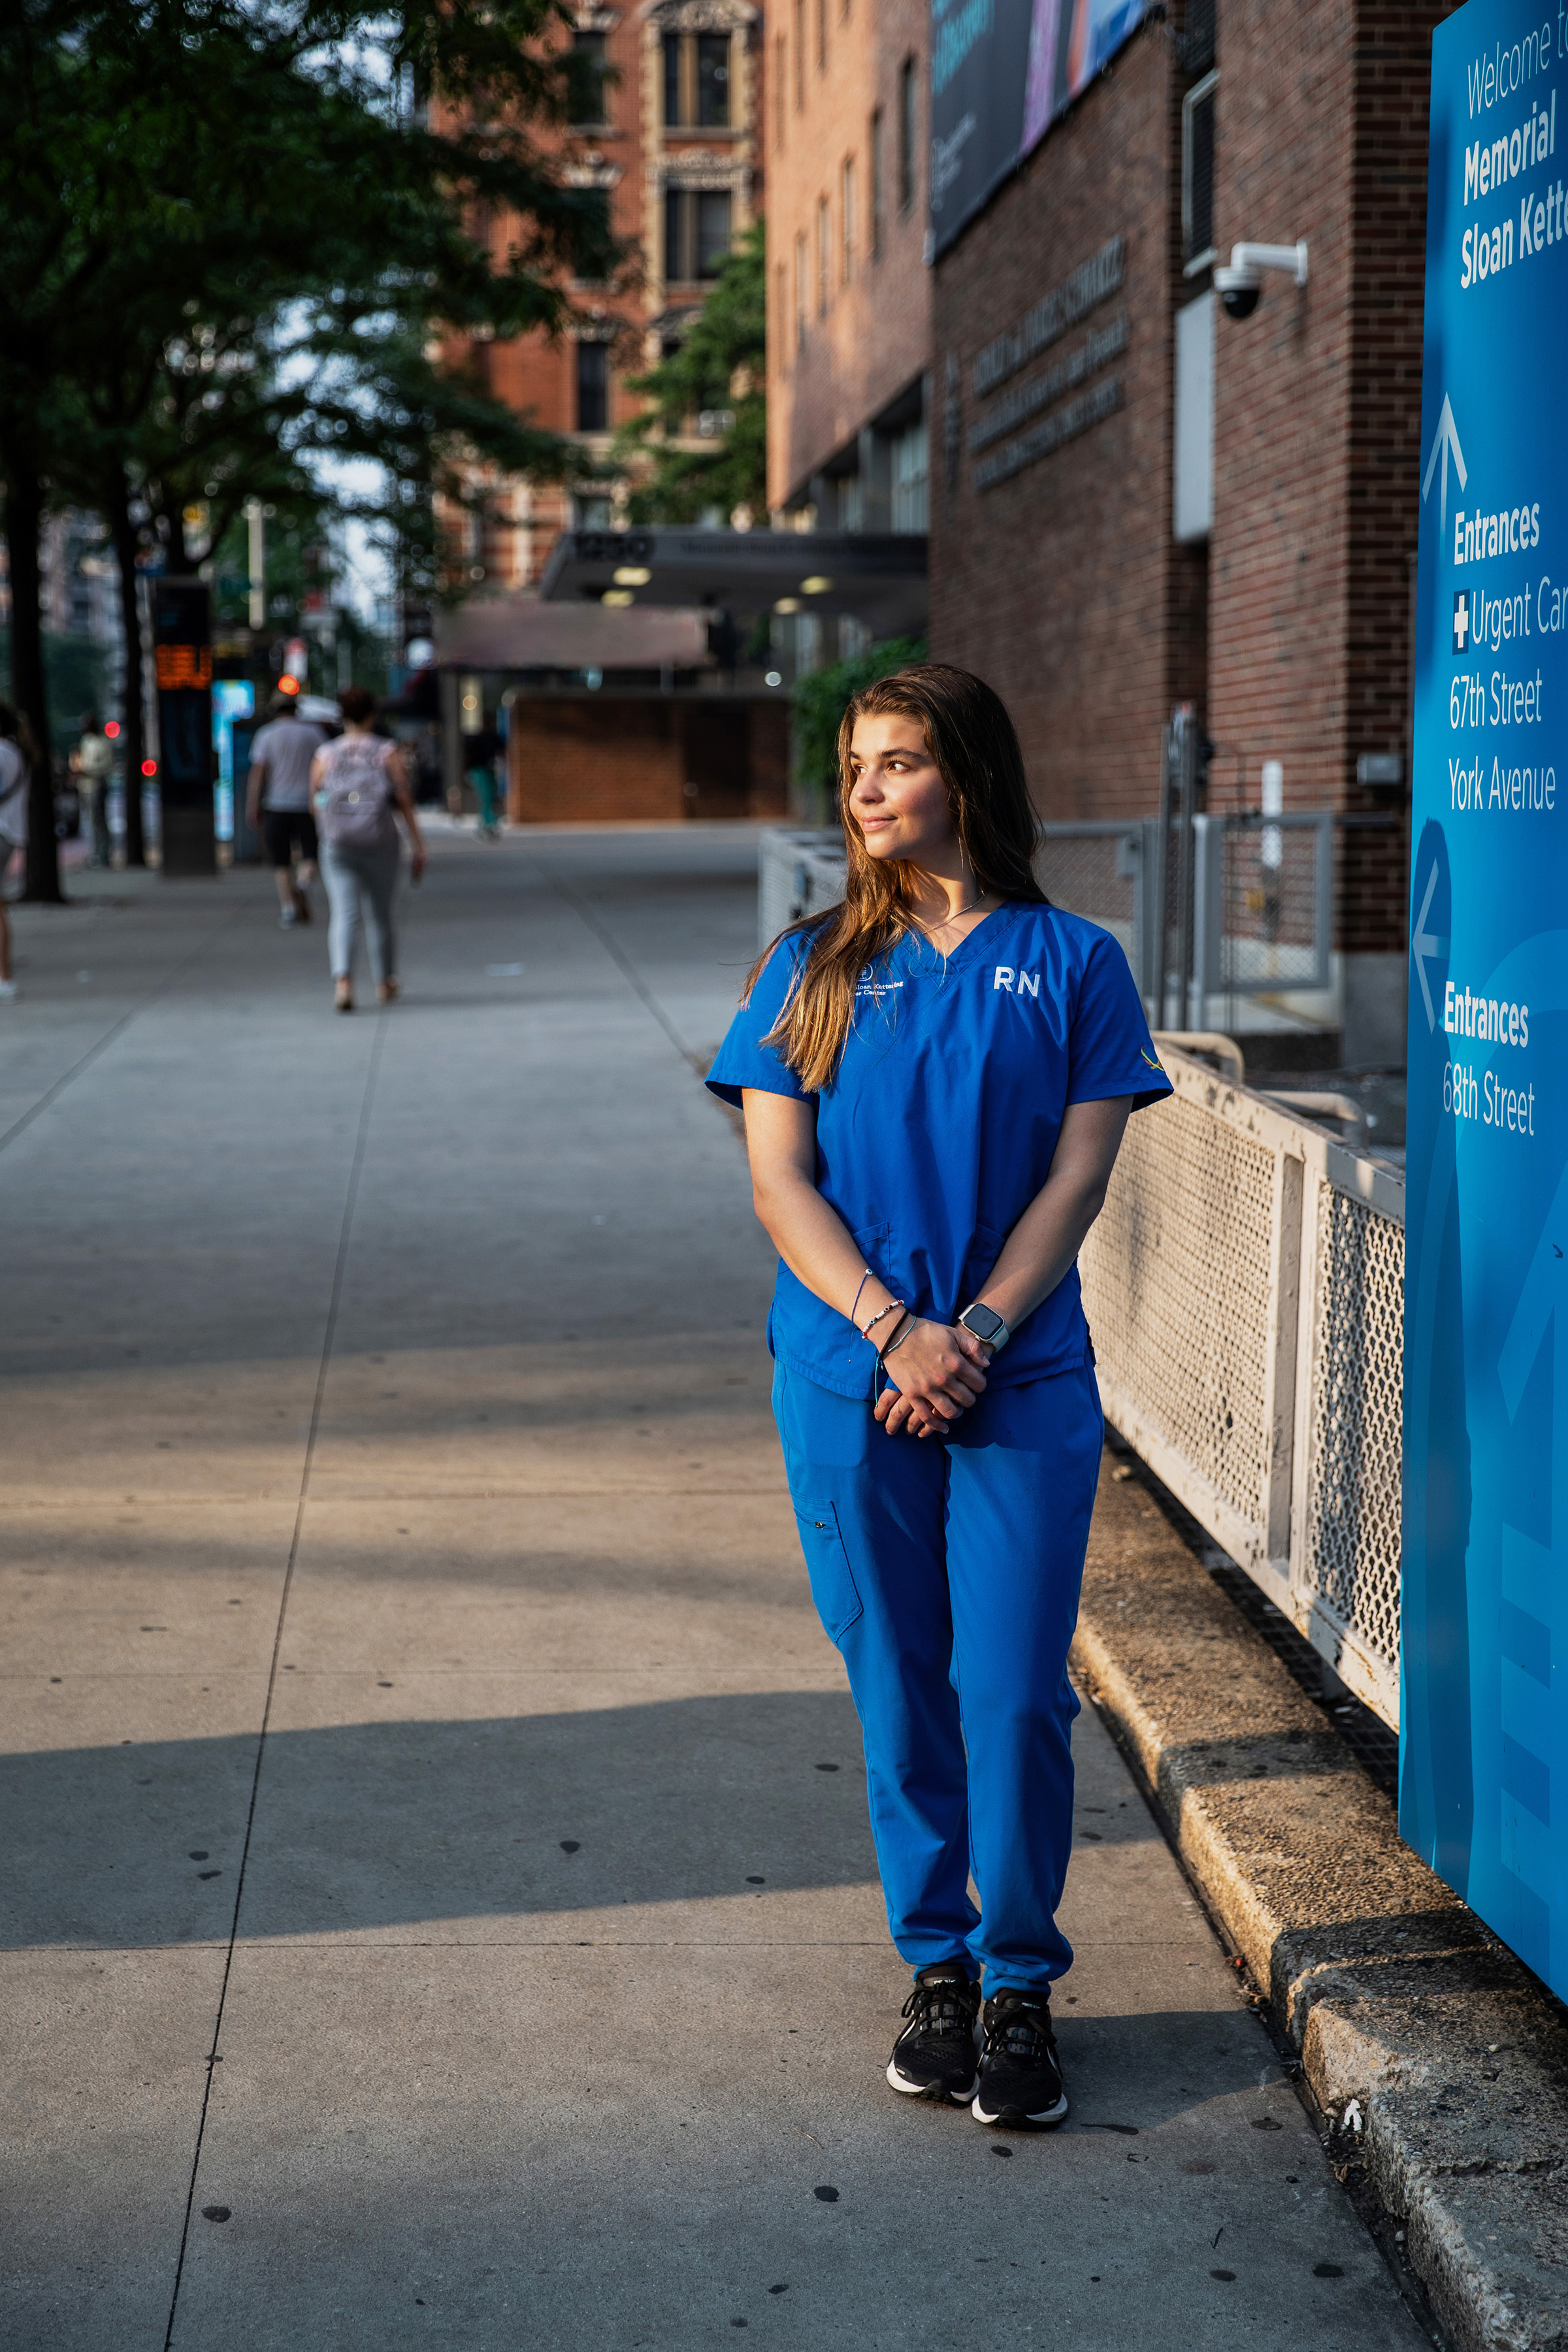 Jackie Izzo in nursing uniform walking down a sidewalk, photo by Cardoni